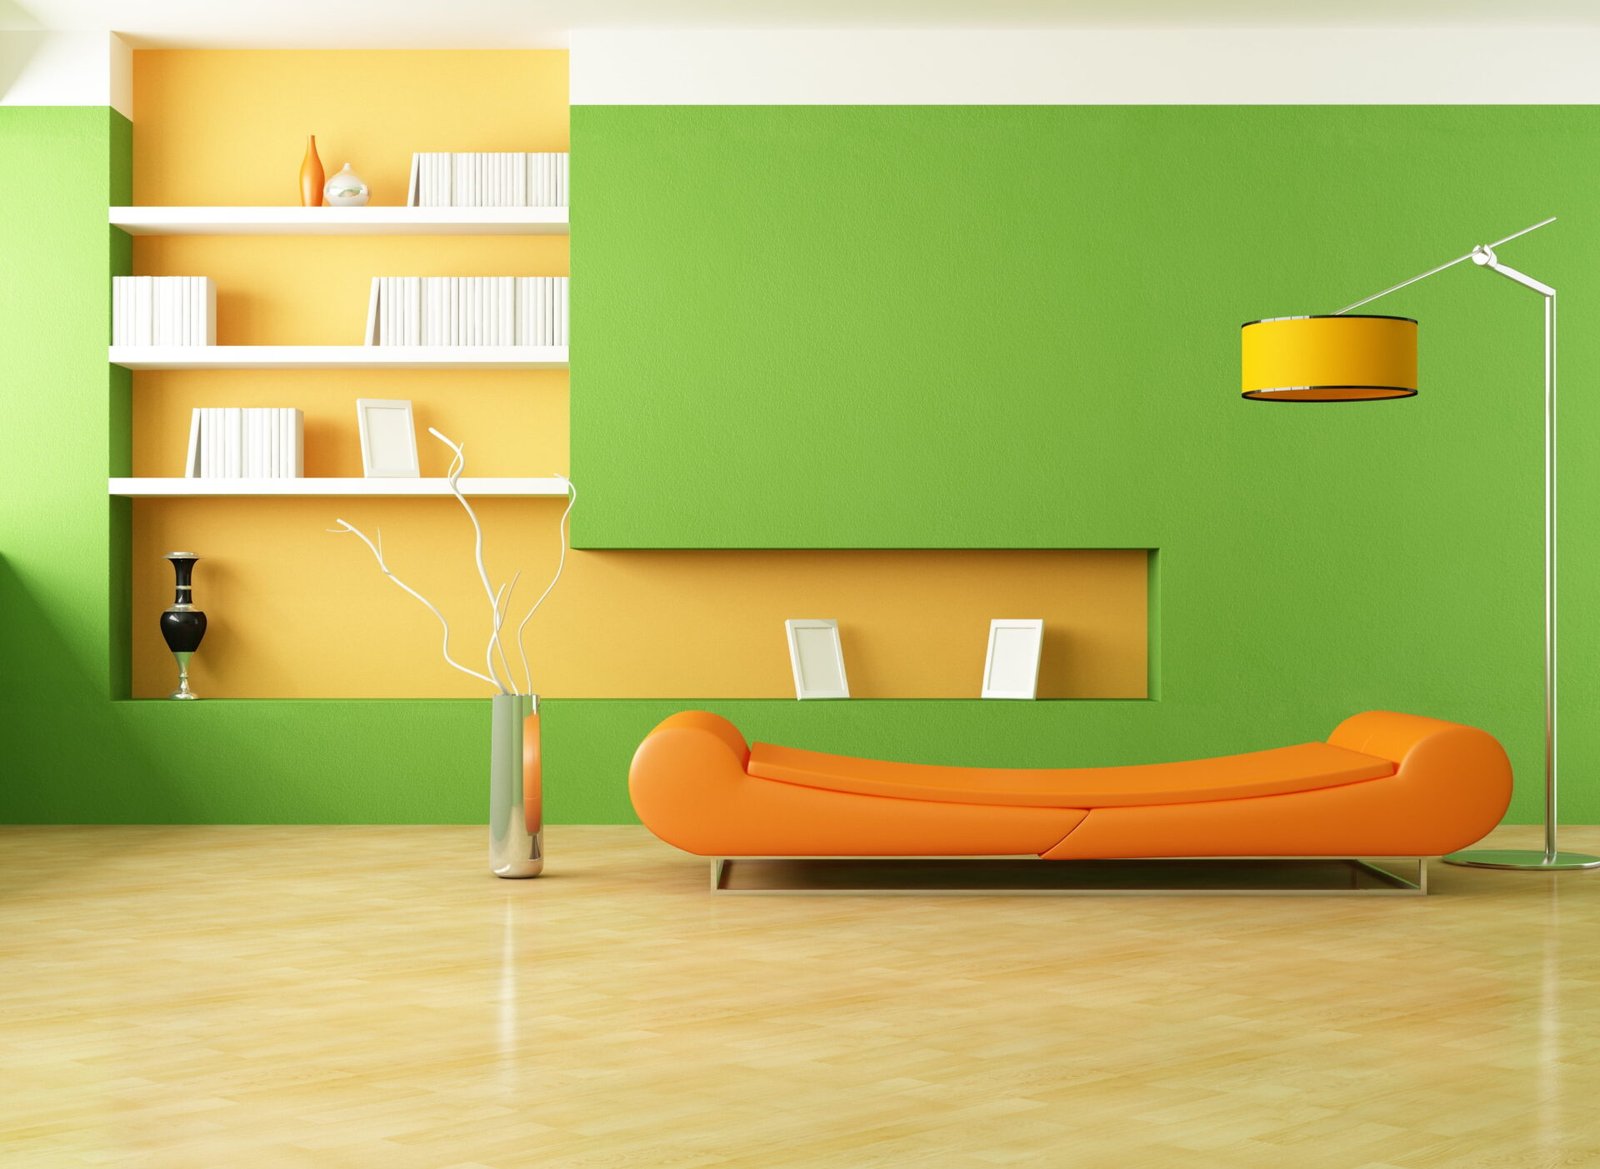 green-yellow-wall-with-book-self-and-orange-sofa